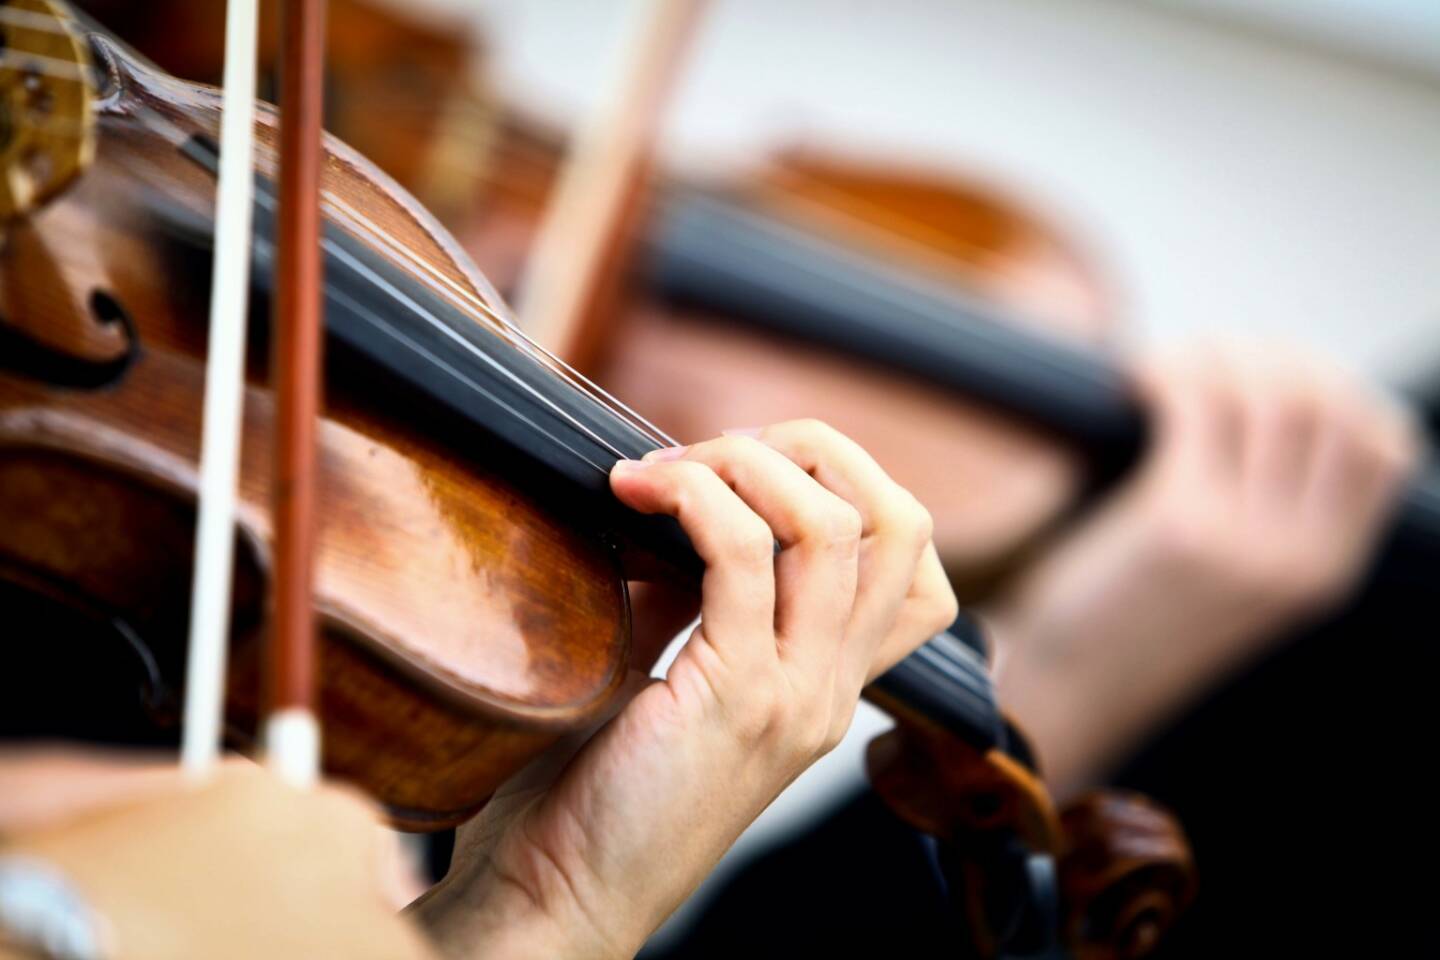 Geige, Geigenspieler, spielen, Bogen, Saite, Violine, http://www.shutterstock.com/de/pic-141732784/stock-photo-detail-of-violin-being-played-by-a-musician.html 